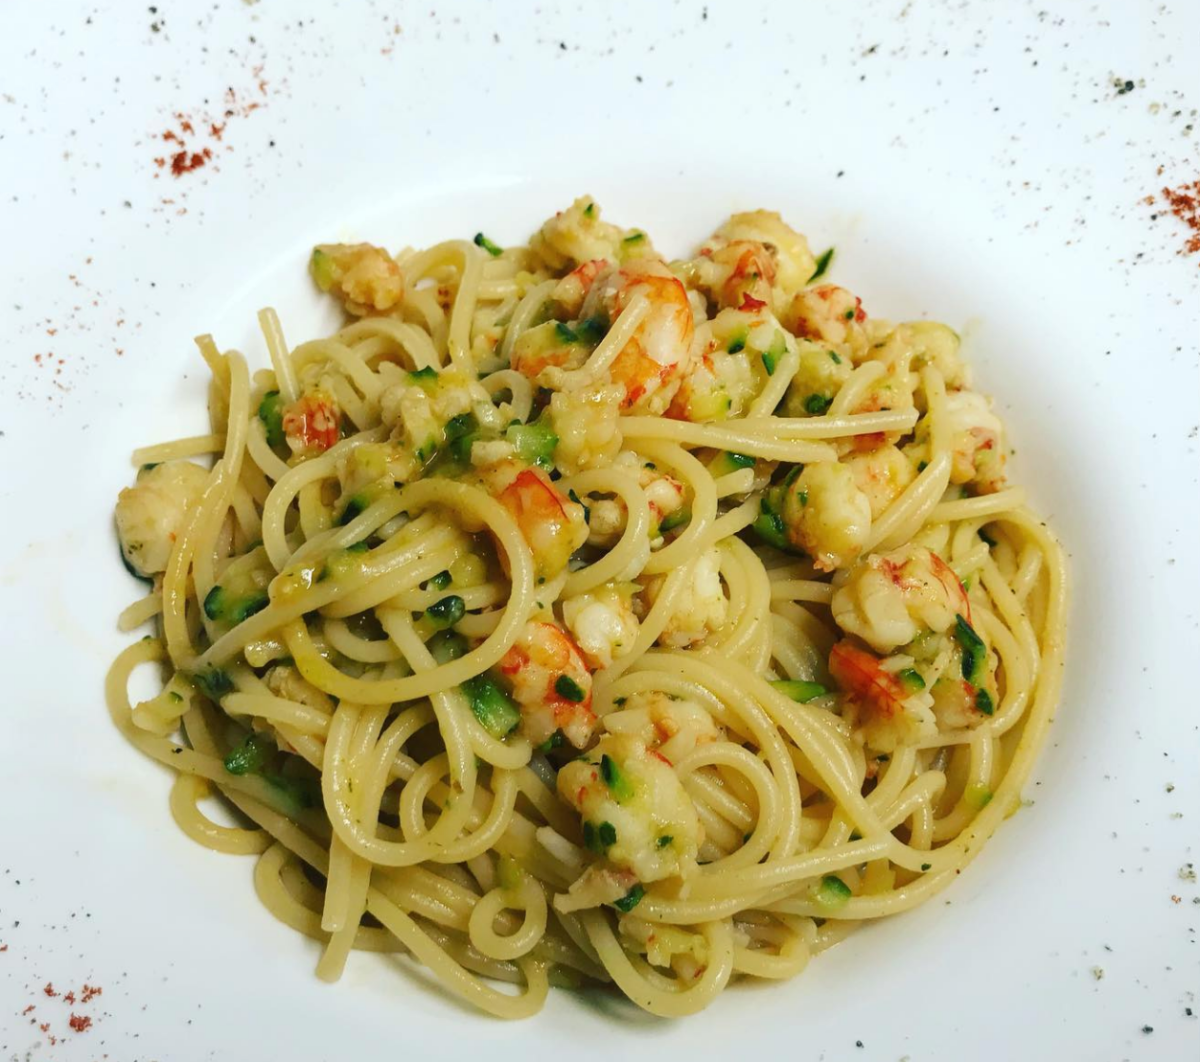 Spaghetti with asparagus and prawns at Enoteca Al Volto